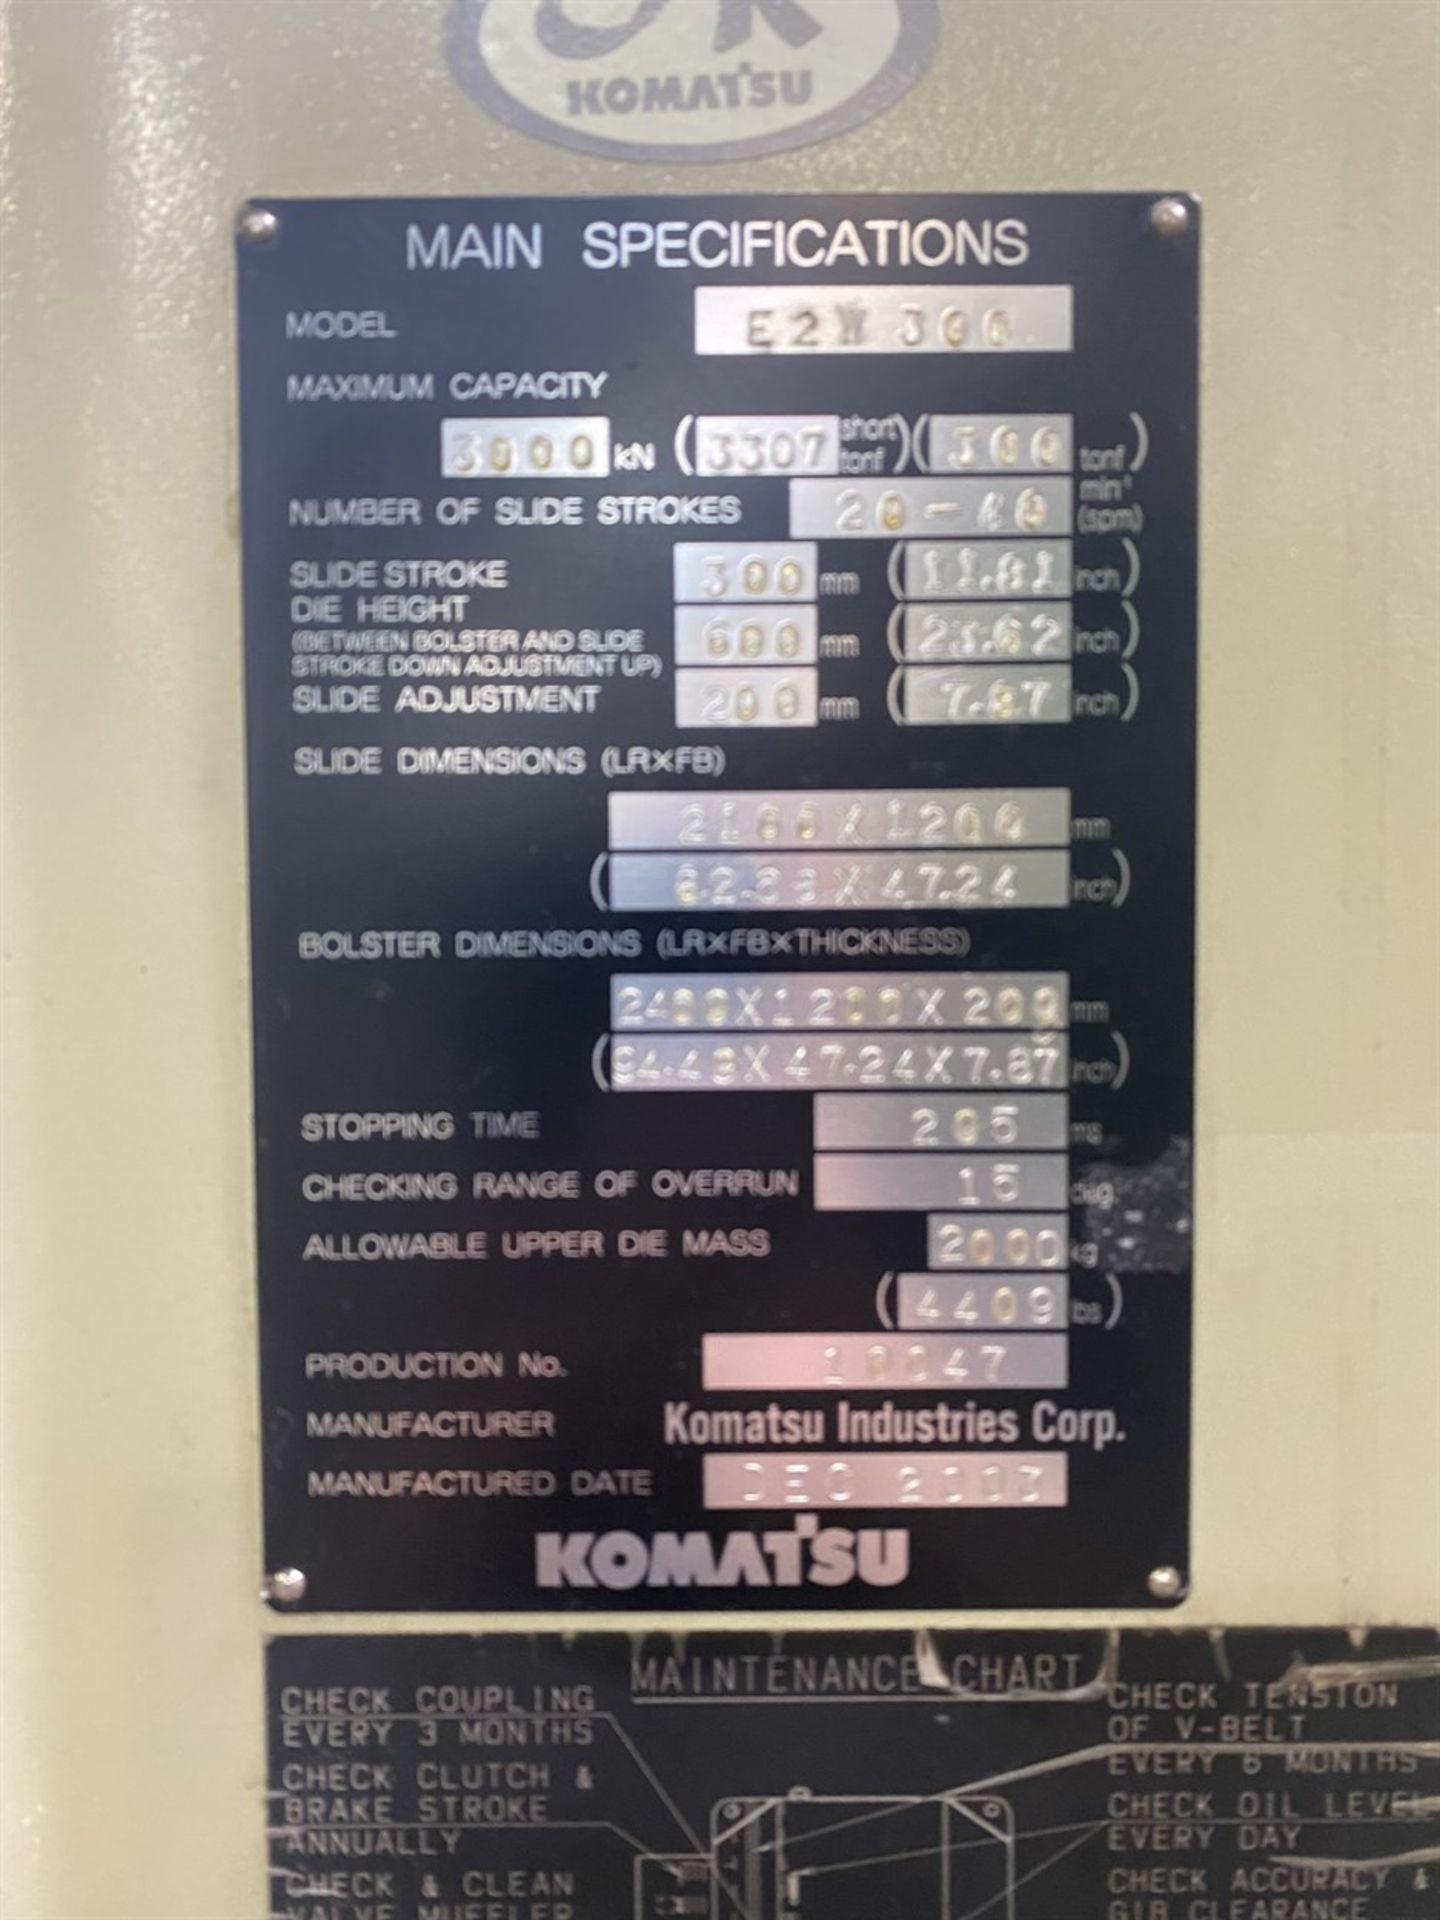 2003 KOMATSU E2W 300 Straight Side Press, s/n 10047, 300 Ton Capacity, 20-40 SPM, 11.81” Stroke, - Image 8 of 8